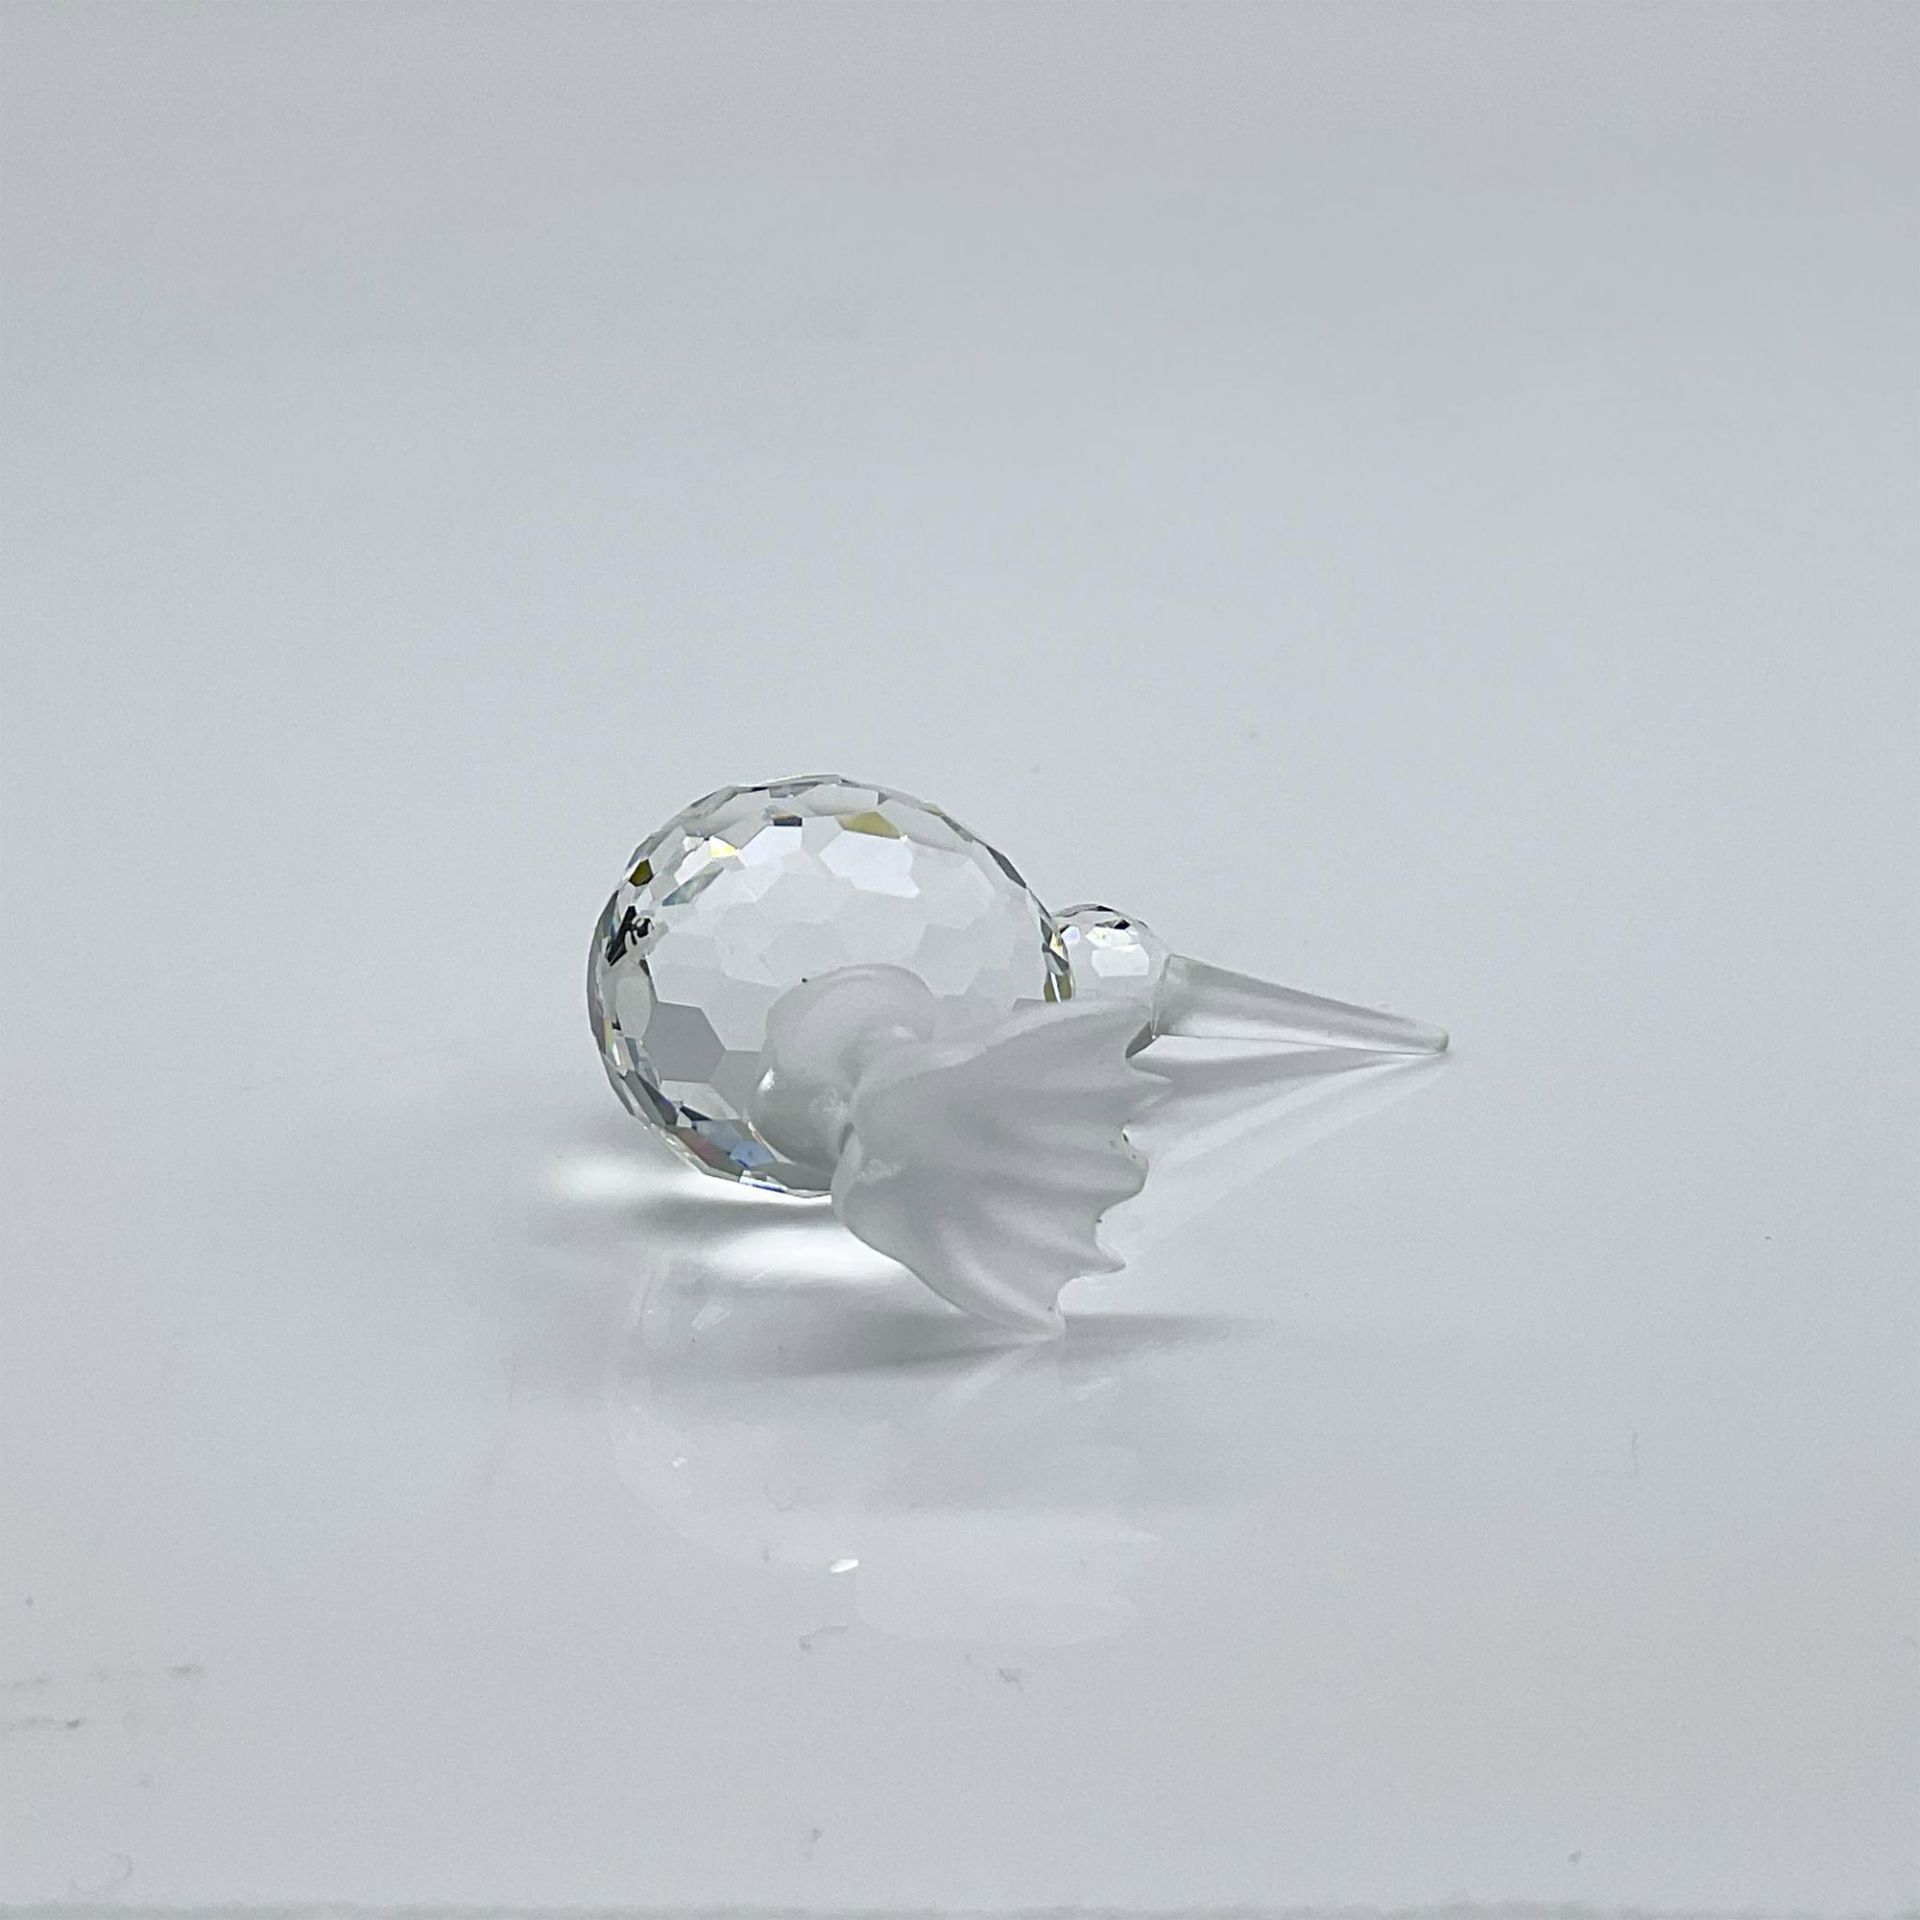 Swarovski Silver Crystal Figurine, Kiwi Bird - Image 3 of 4